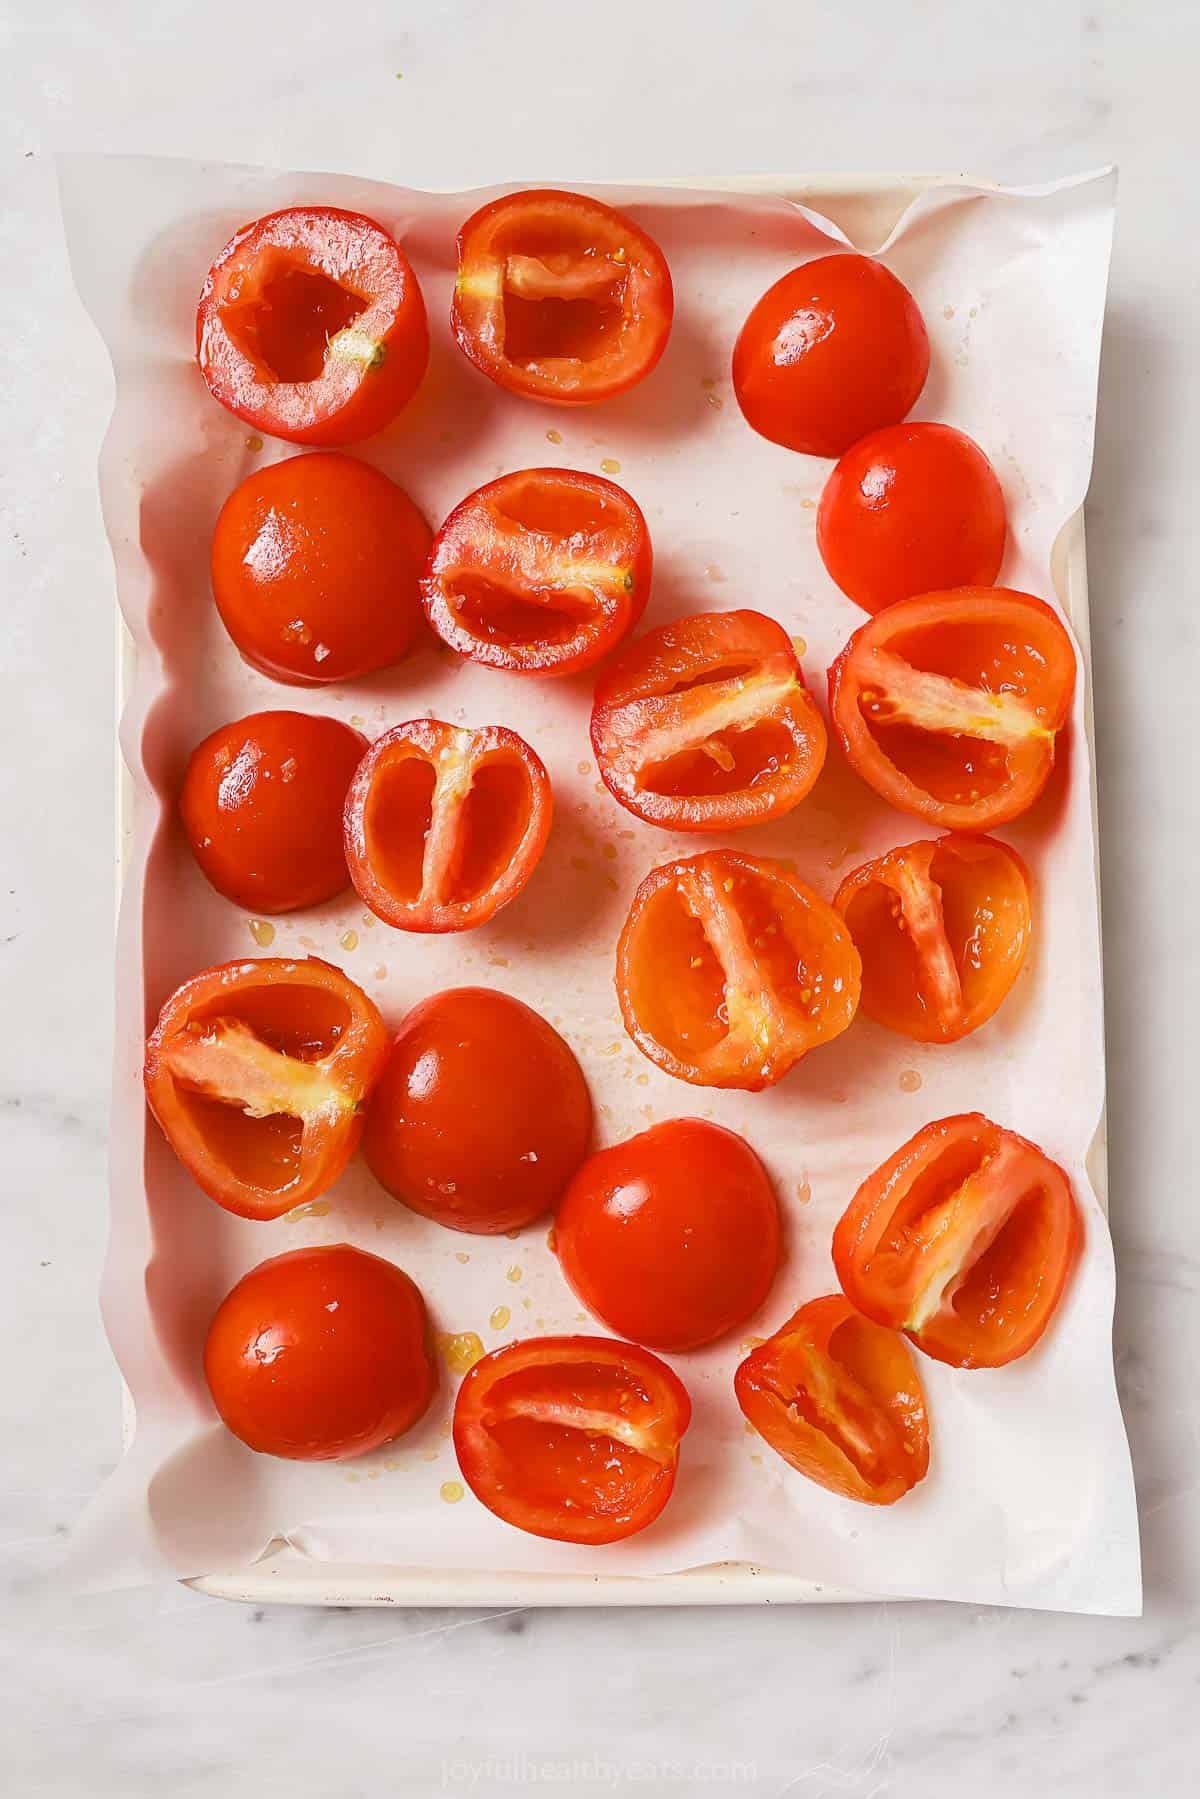 Place tomatoes on baking sheet. 